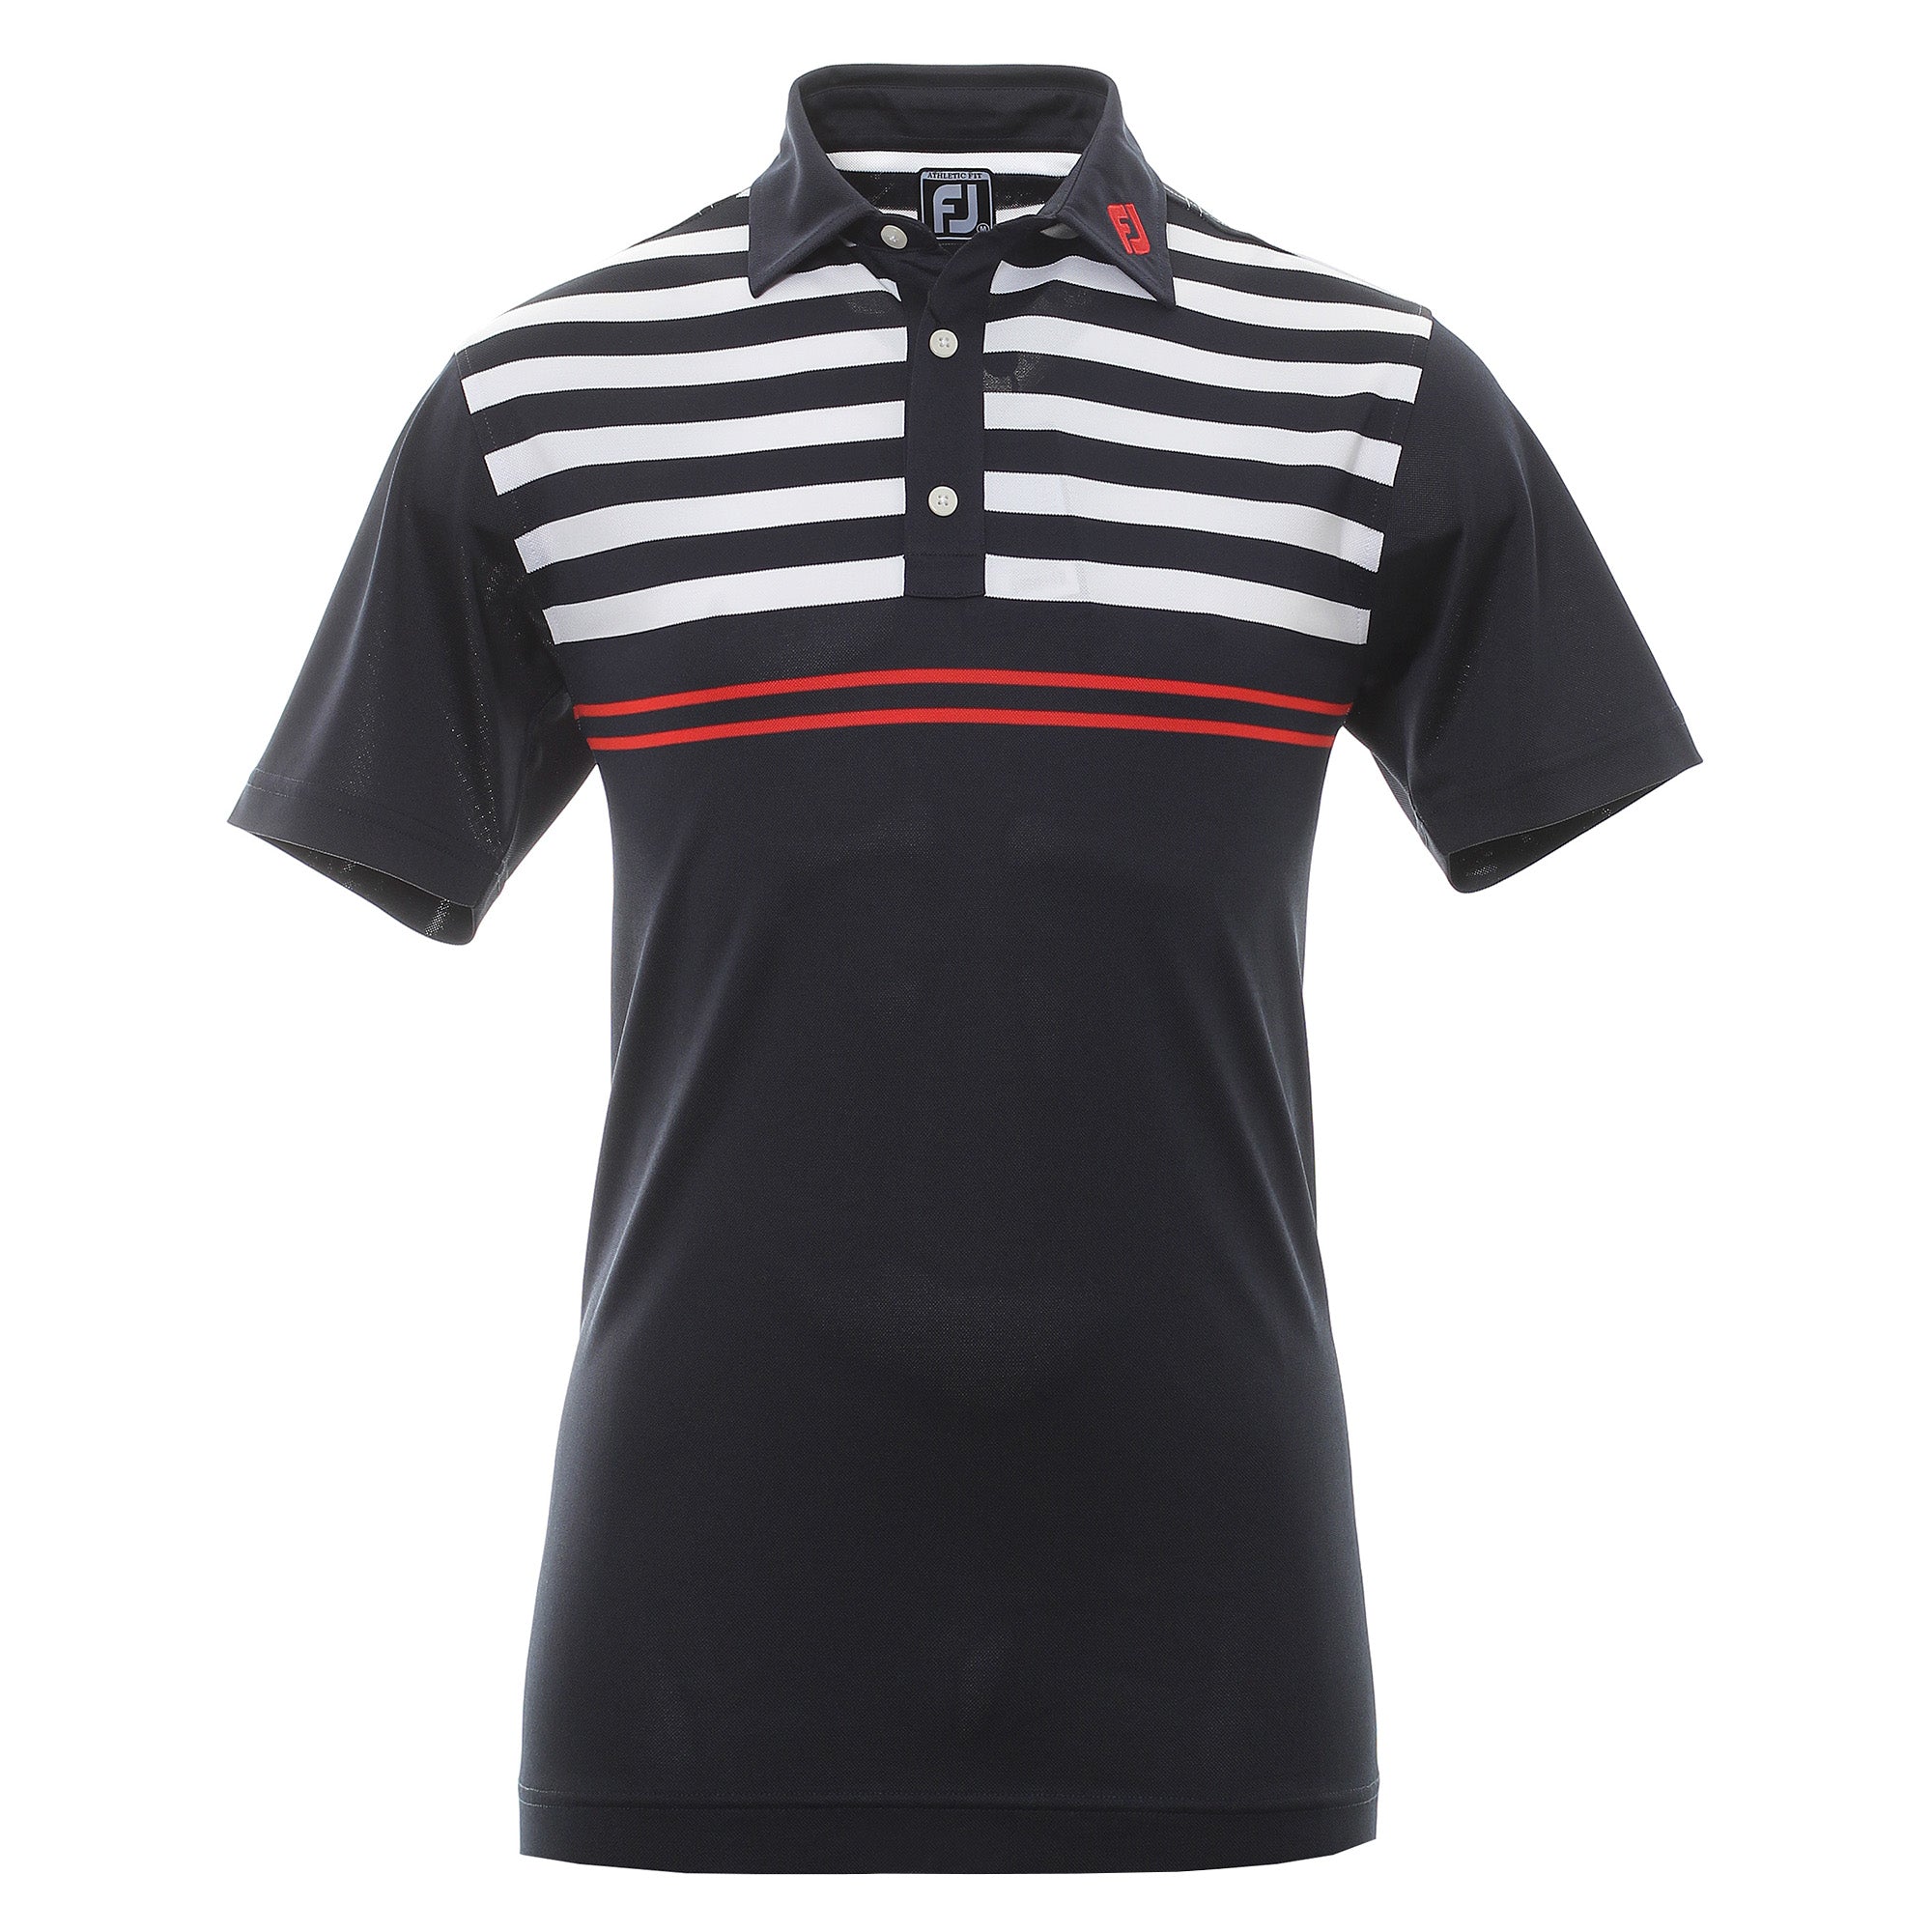 FootJoy Graphic Chest Stripe Golf Shirt 